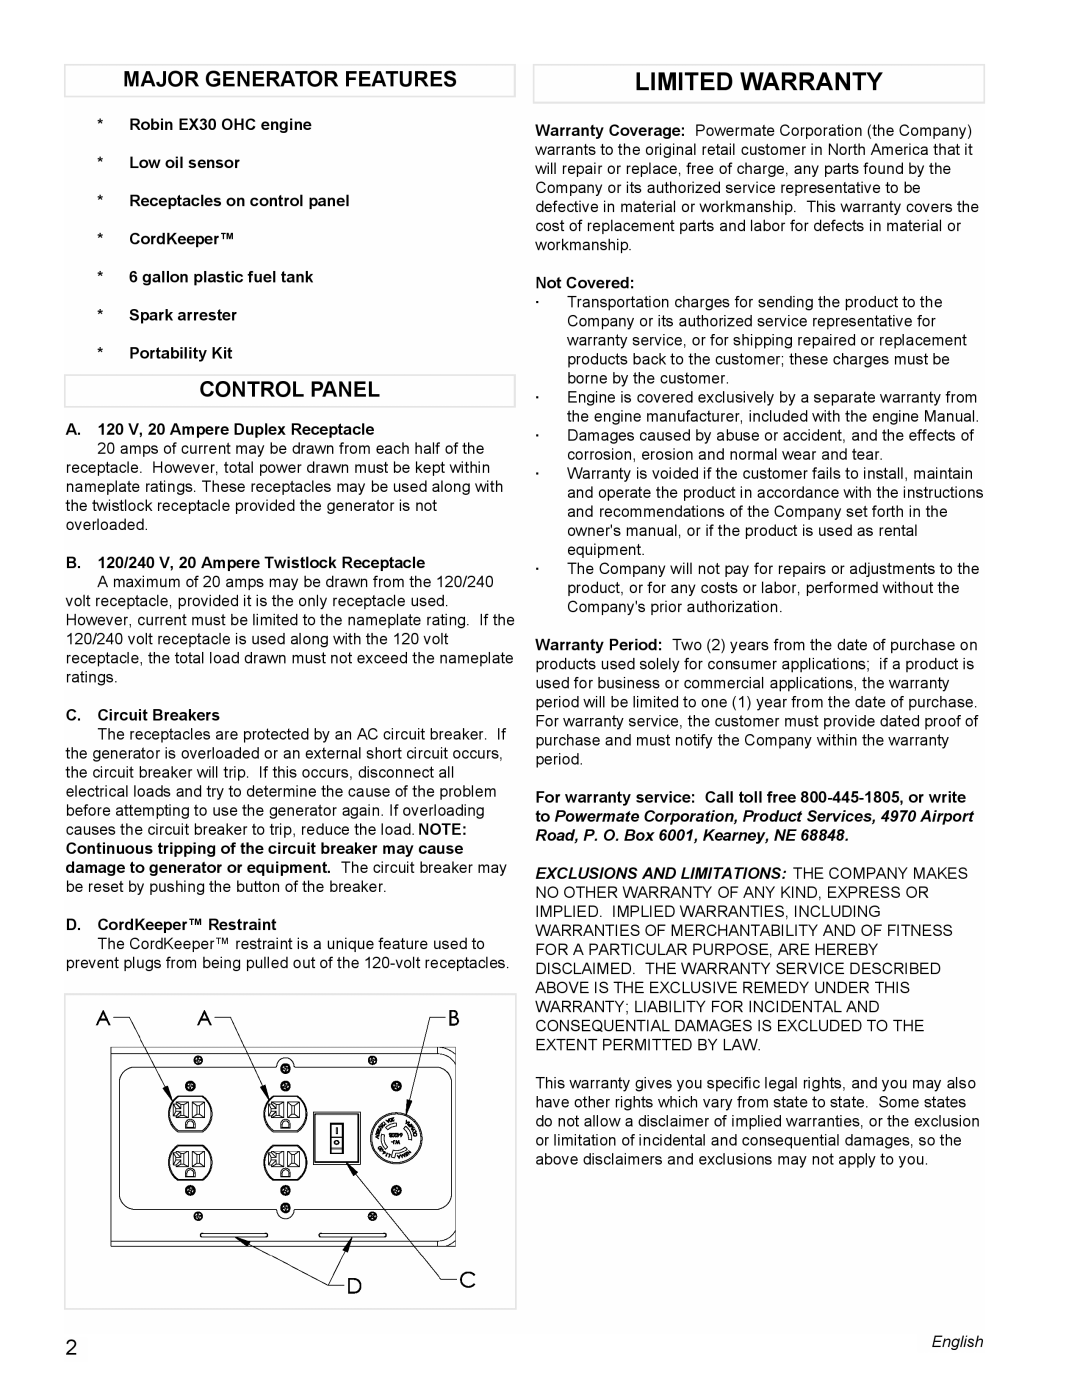 Powermate PMC435003 manual Limited Warranty, Major Generator Features, Control Panel 